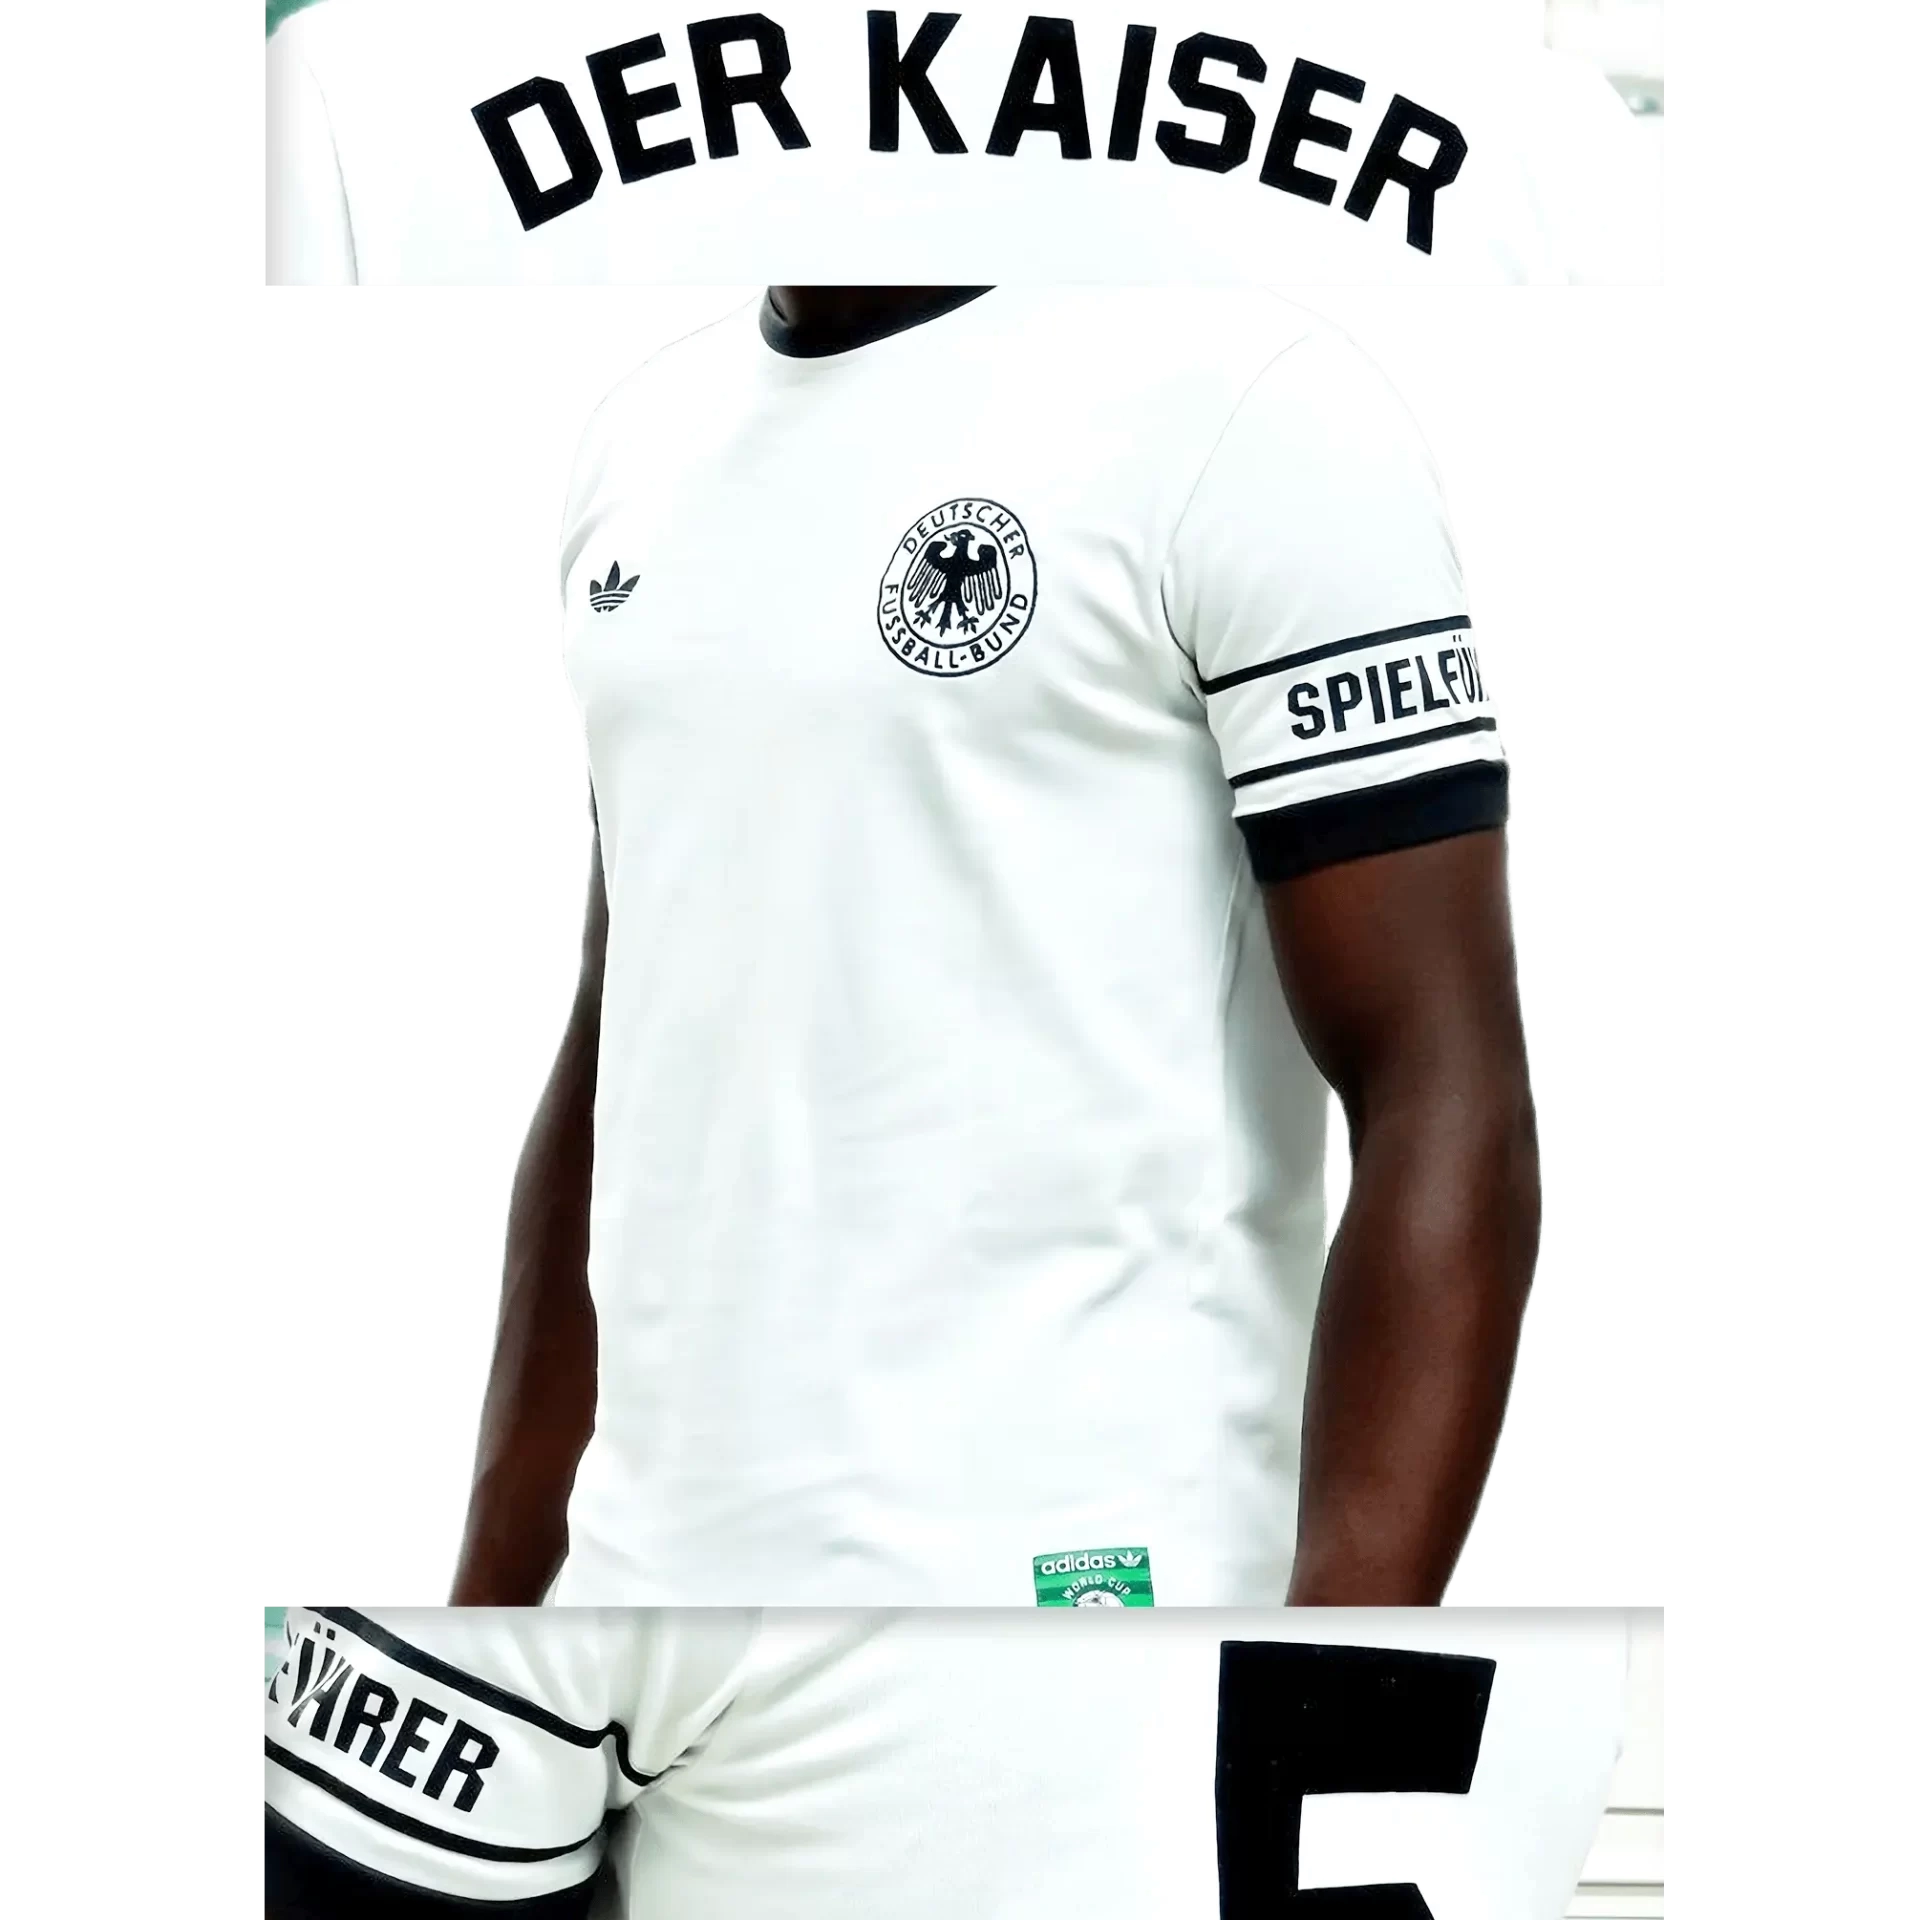 Men's 2006 Der Kaiser '74 T-shirt by Adidas Originals: Effective (EnLawded.com file #lmchk57408ip2y123319kg9st)